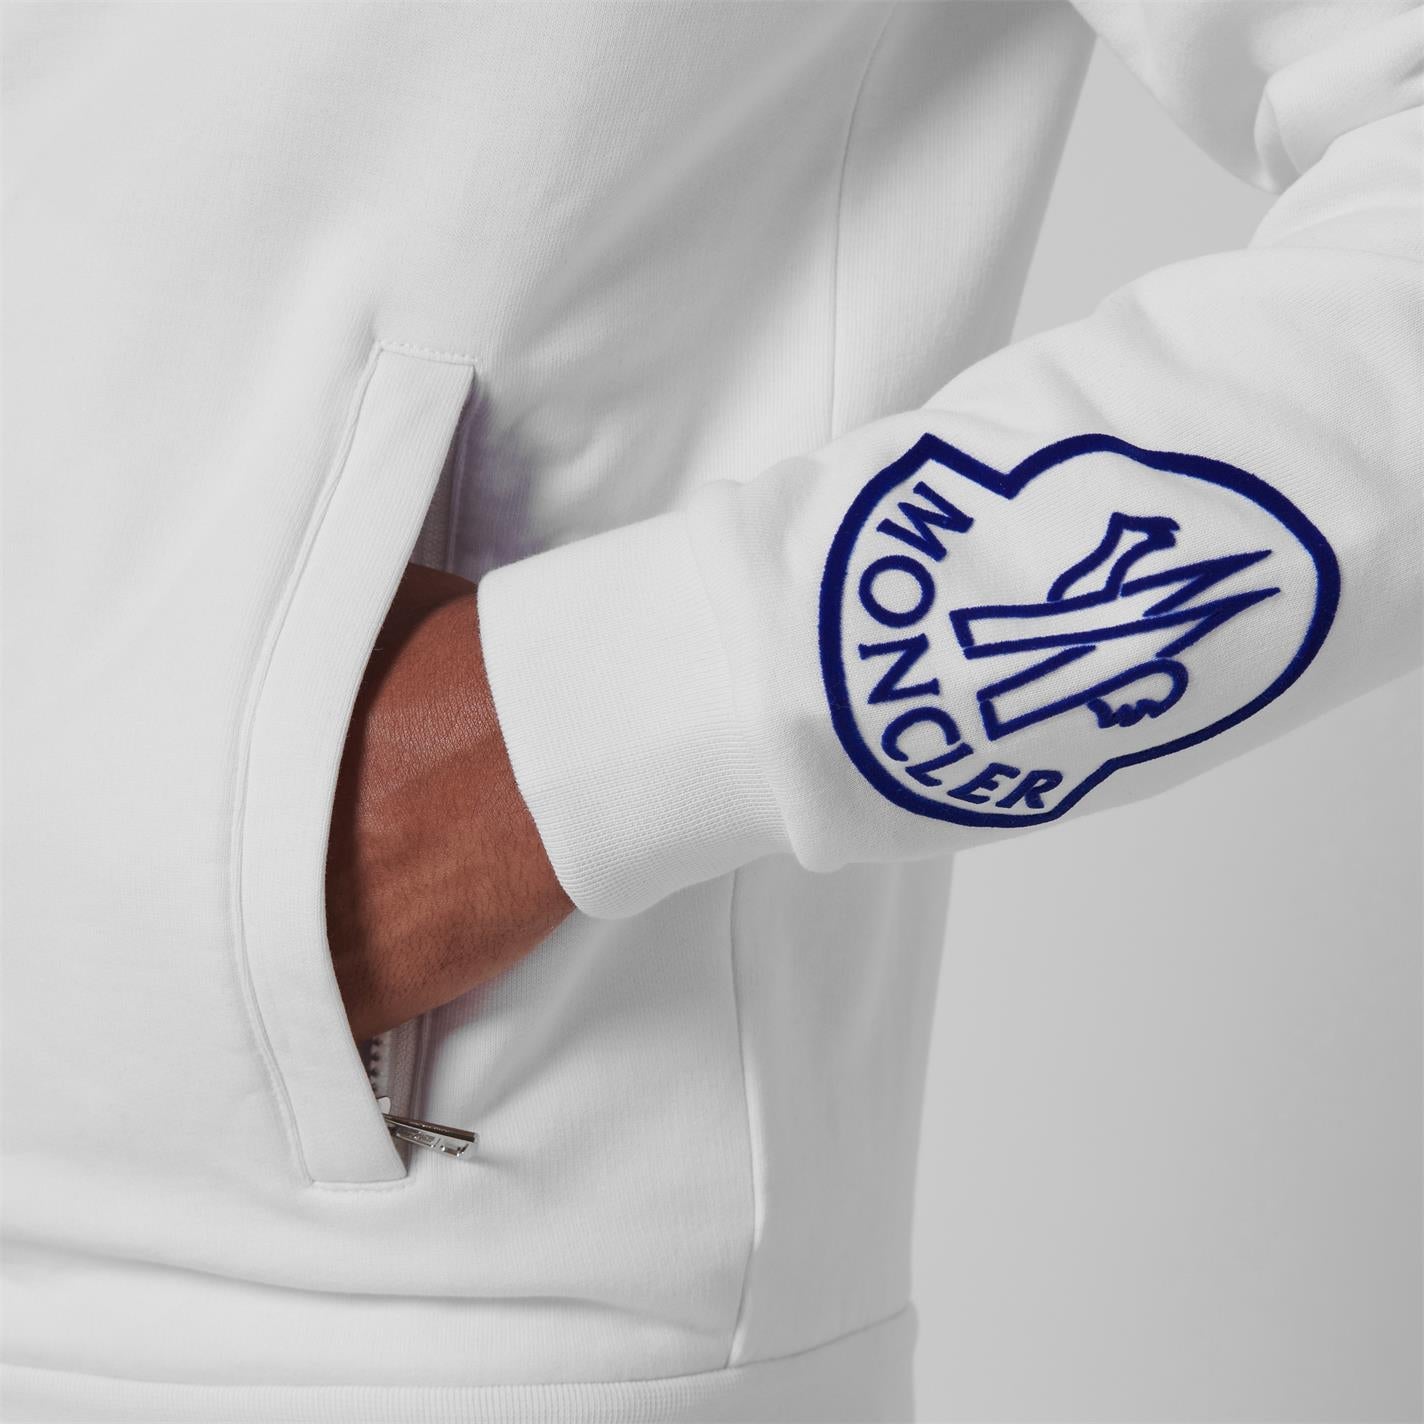 Moncler 'Maglia Cardigan' Arm Logo Track Jacket White - Boinclo ltd